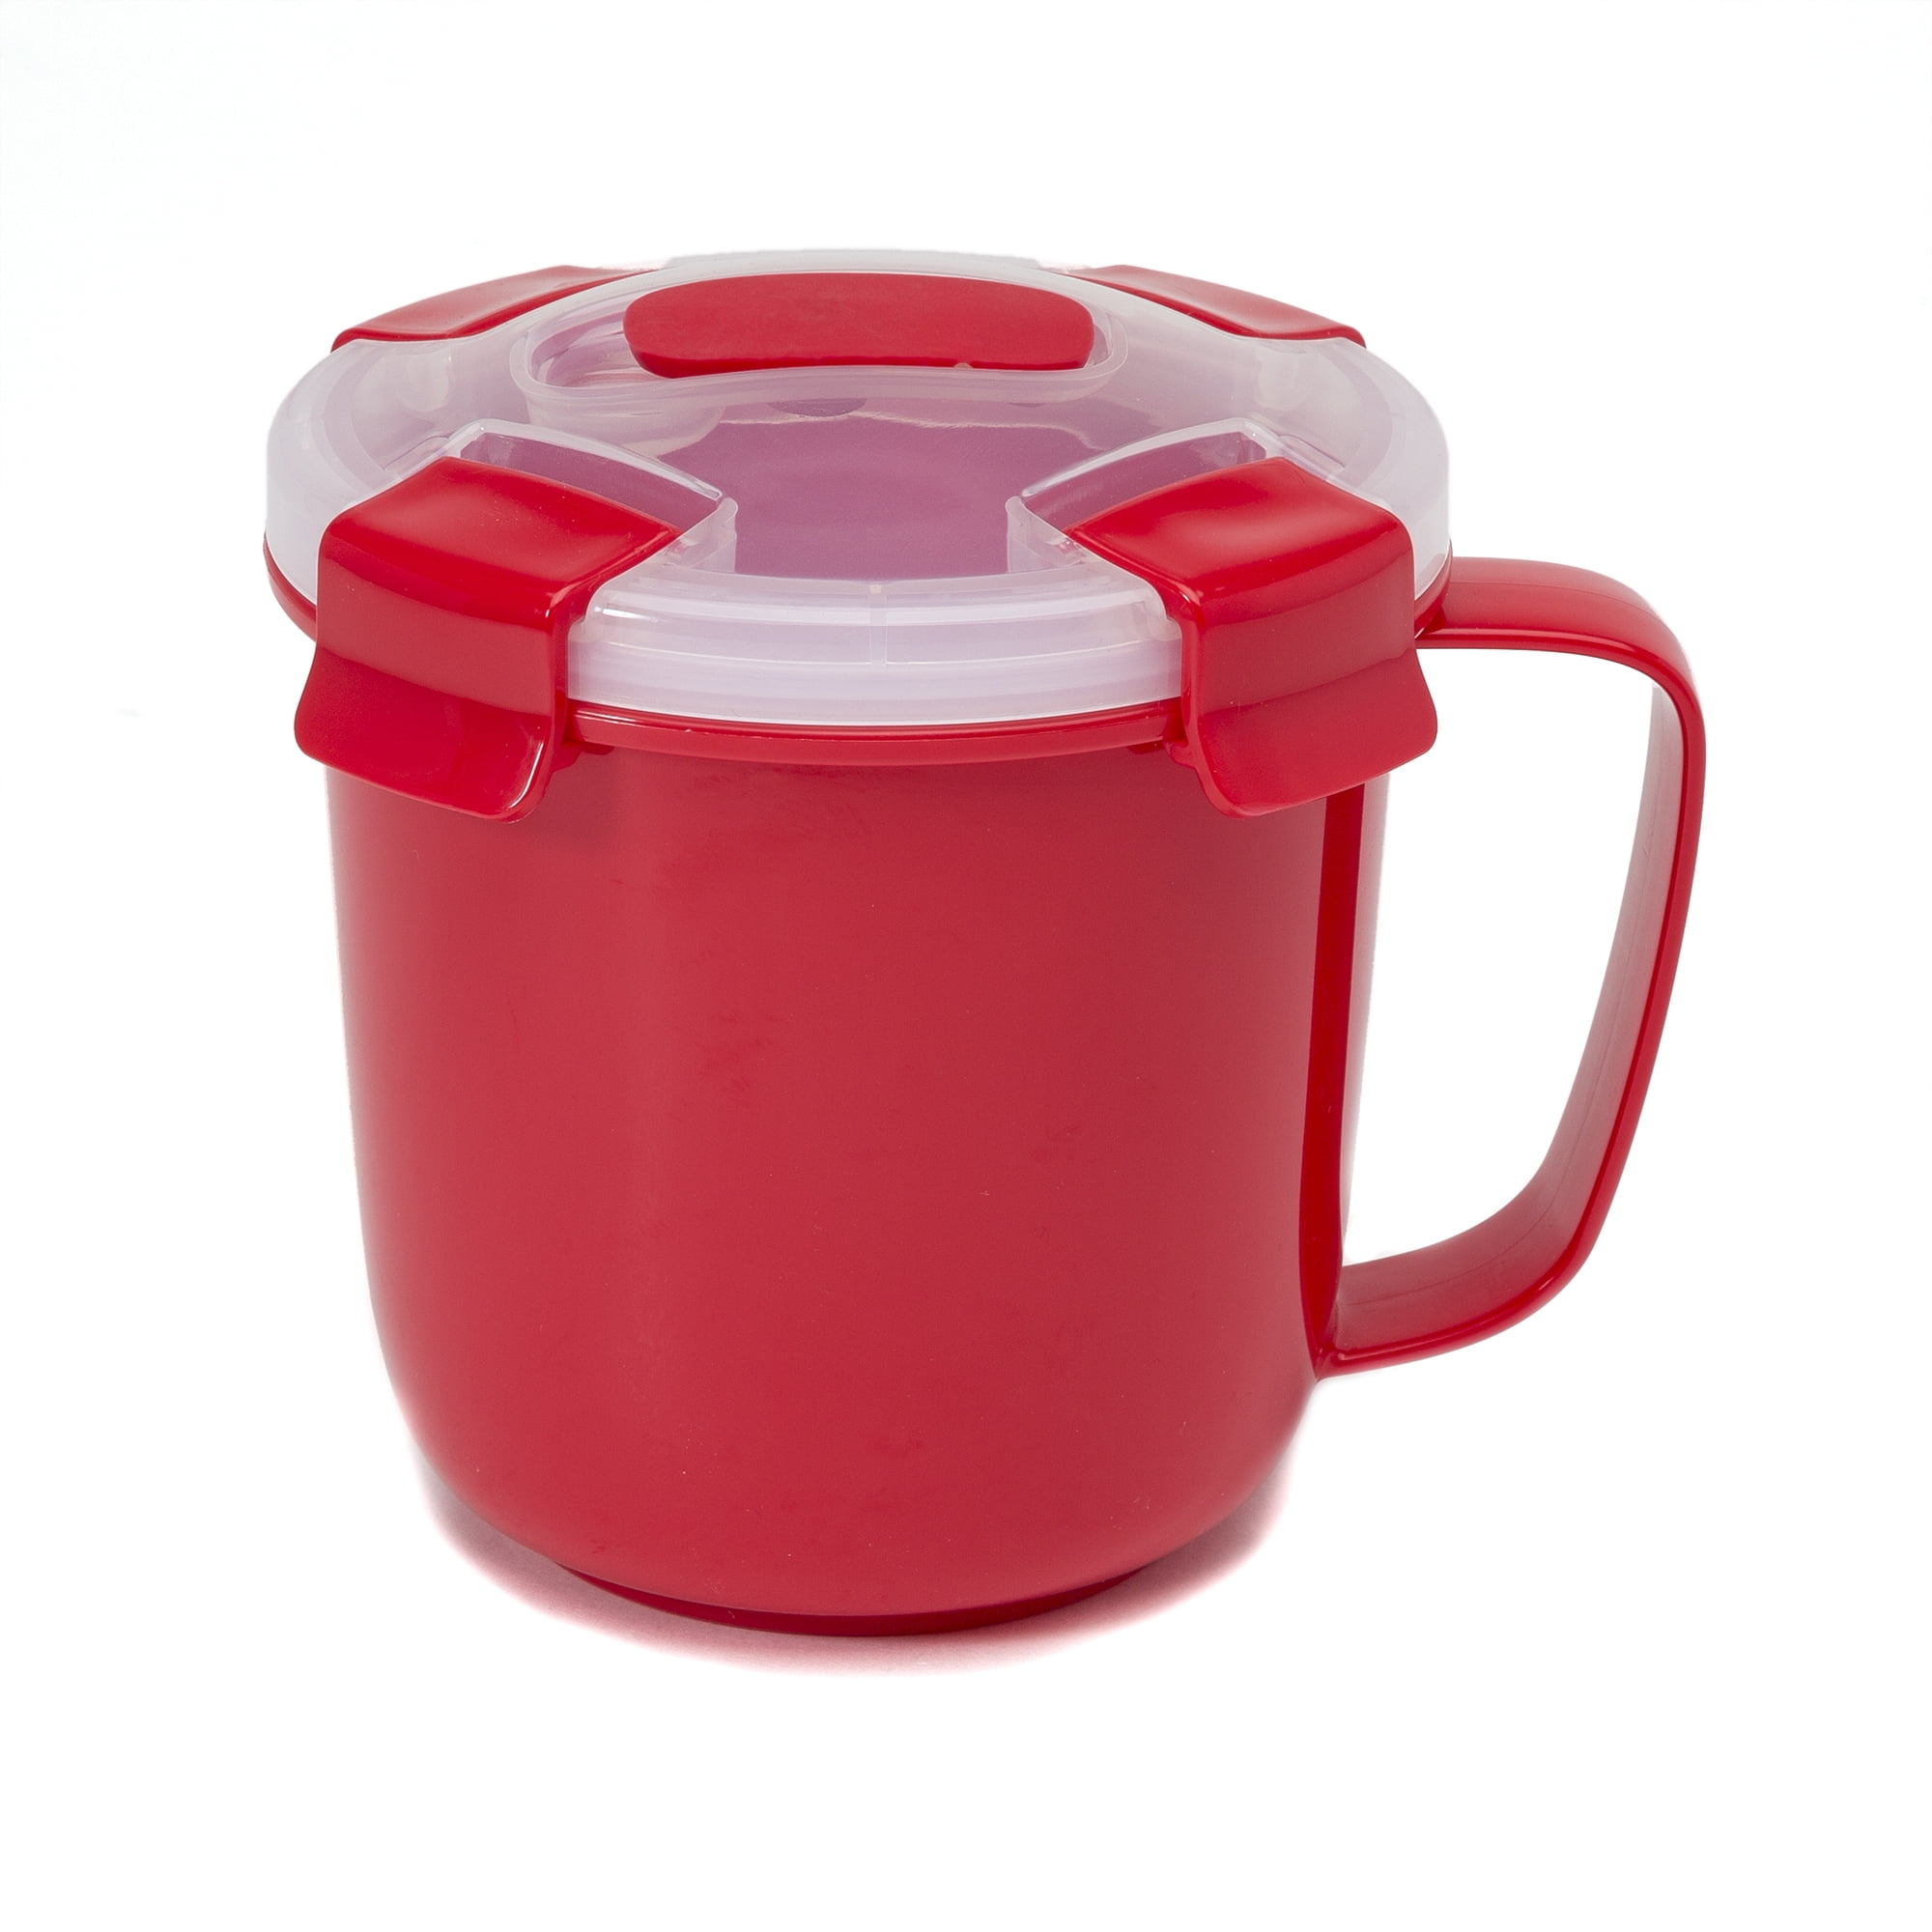 Buy Tupperware Soup Mug online